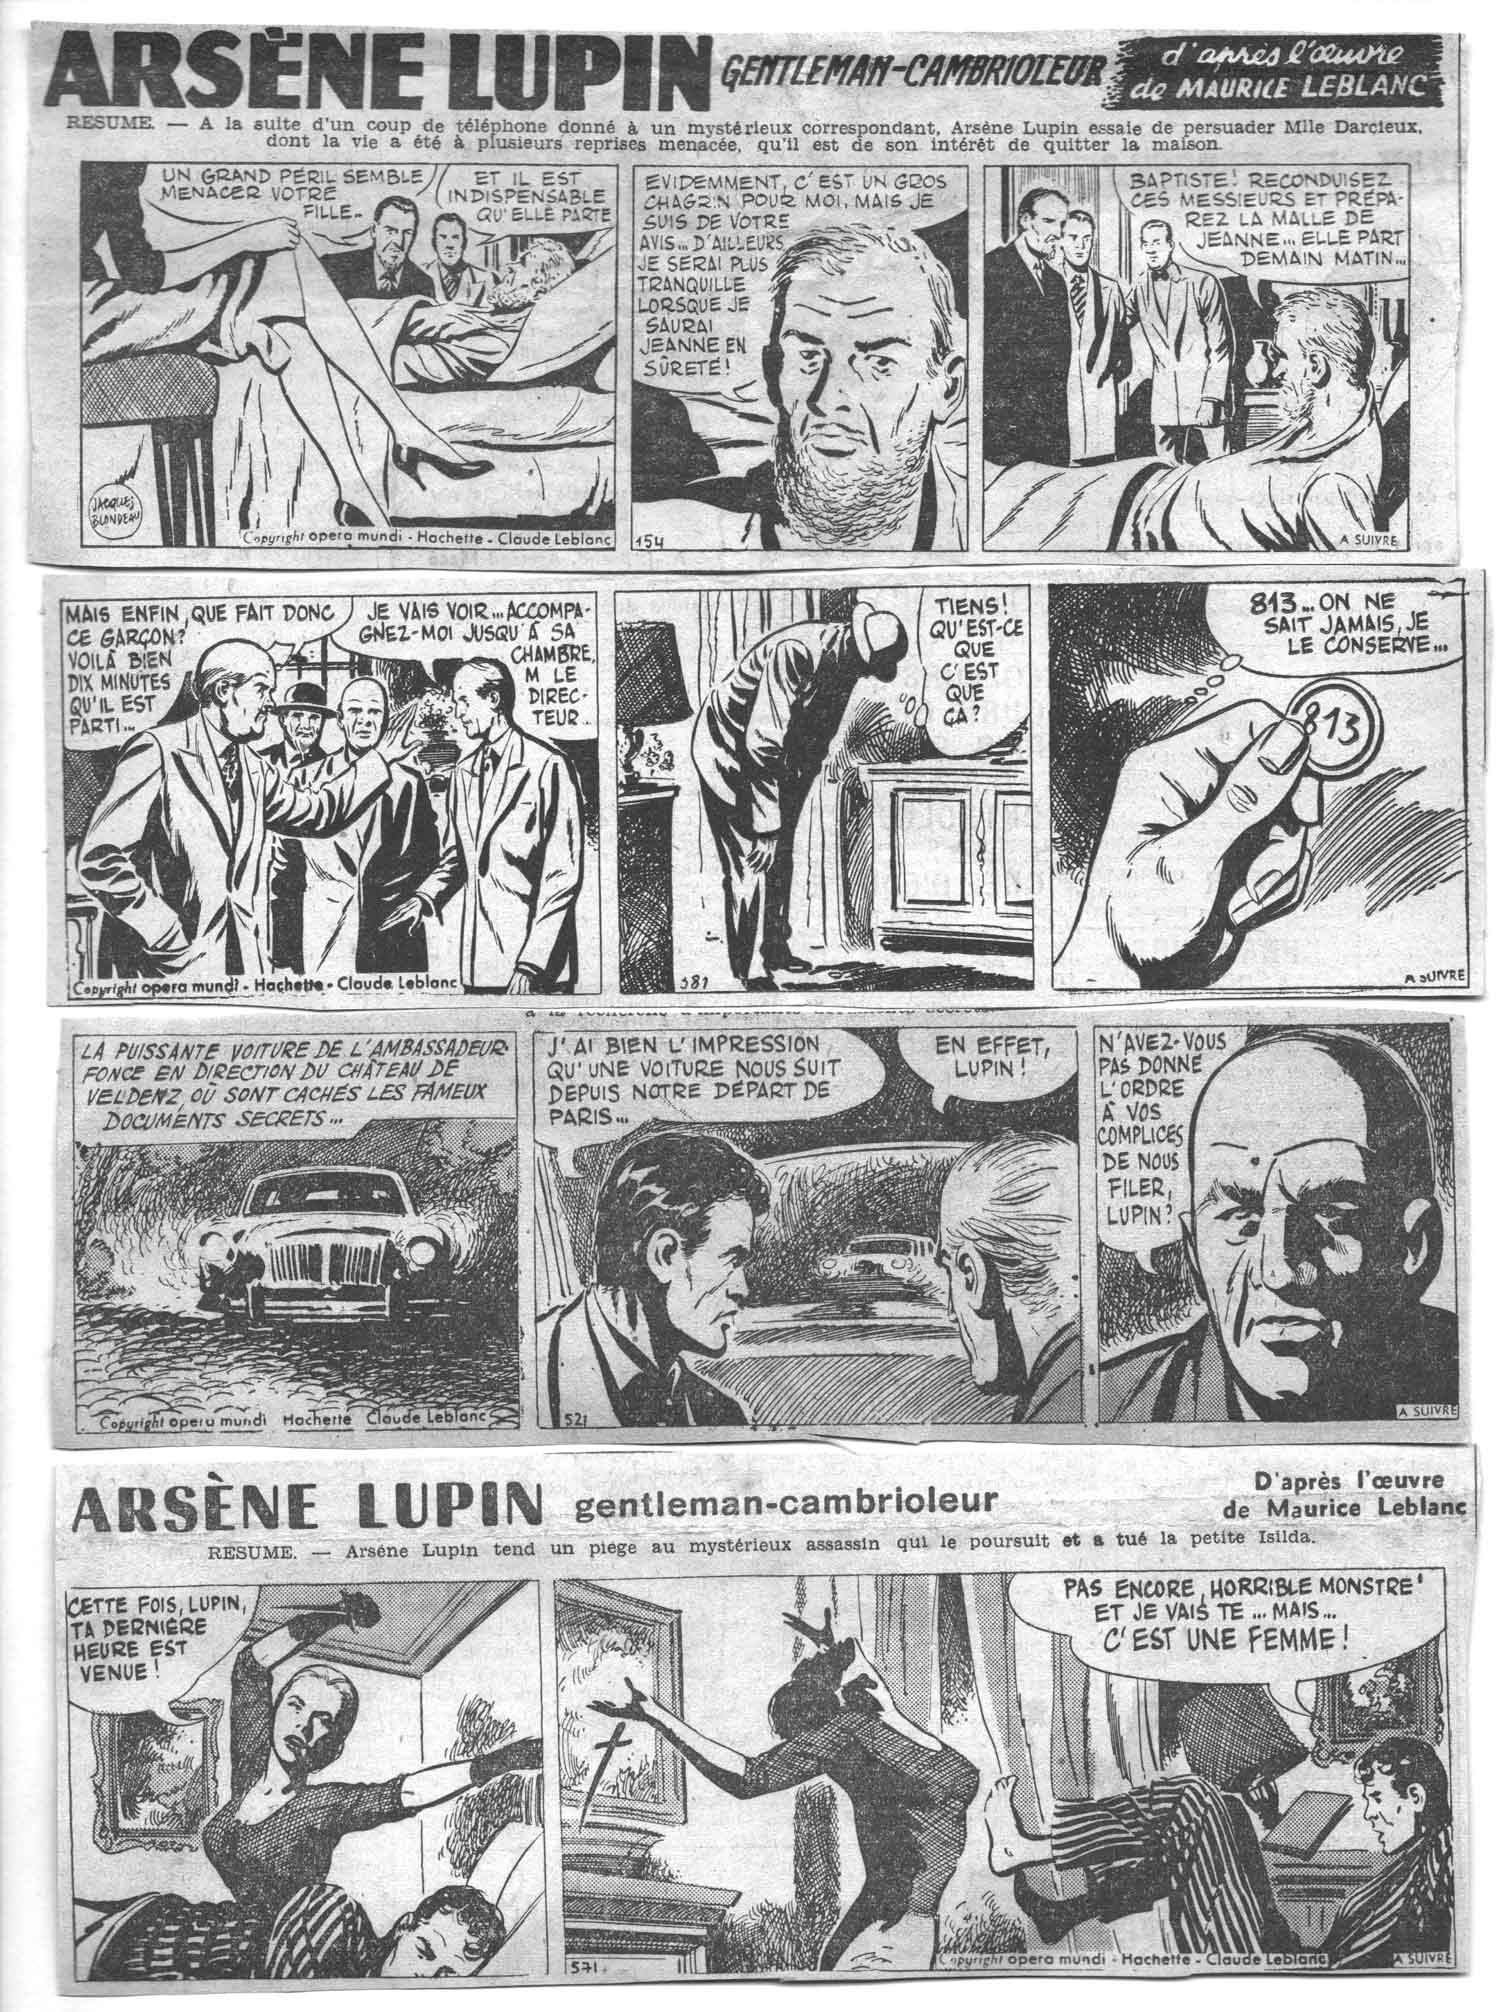 « Arsène Lupin », d’après Maurice Leblanc, pour Opera Mundi (1956).